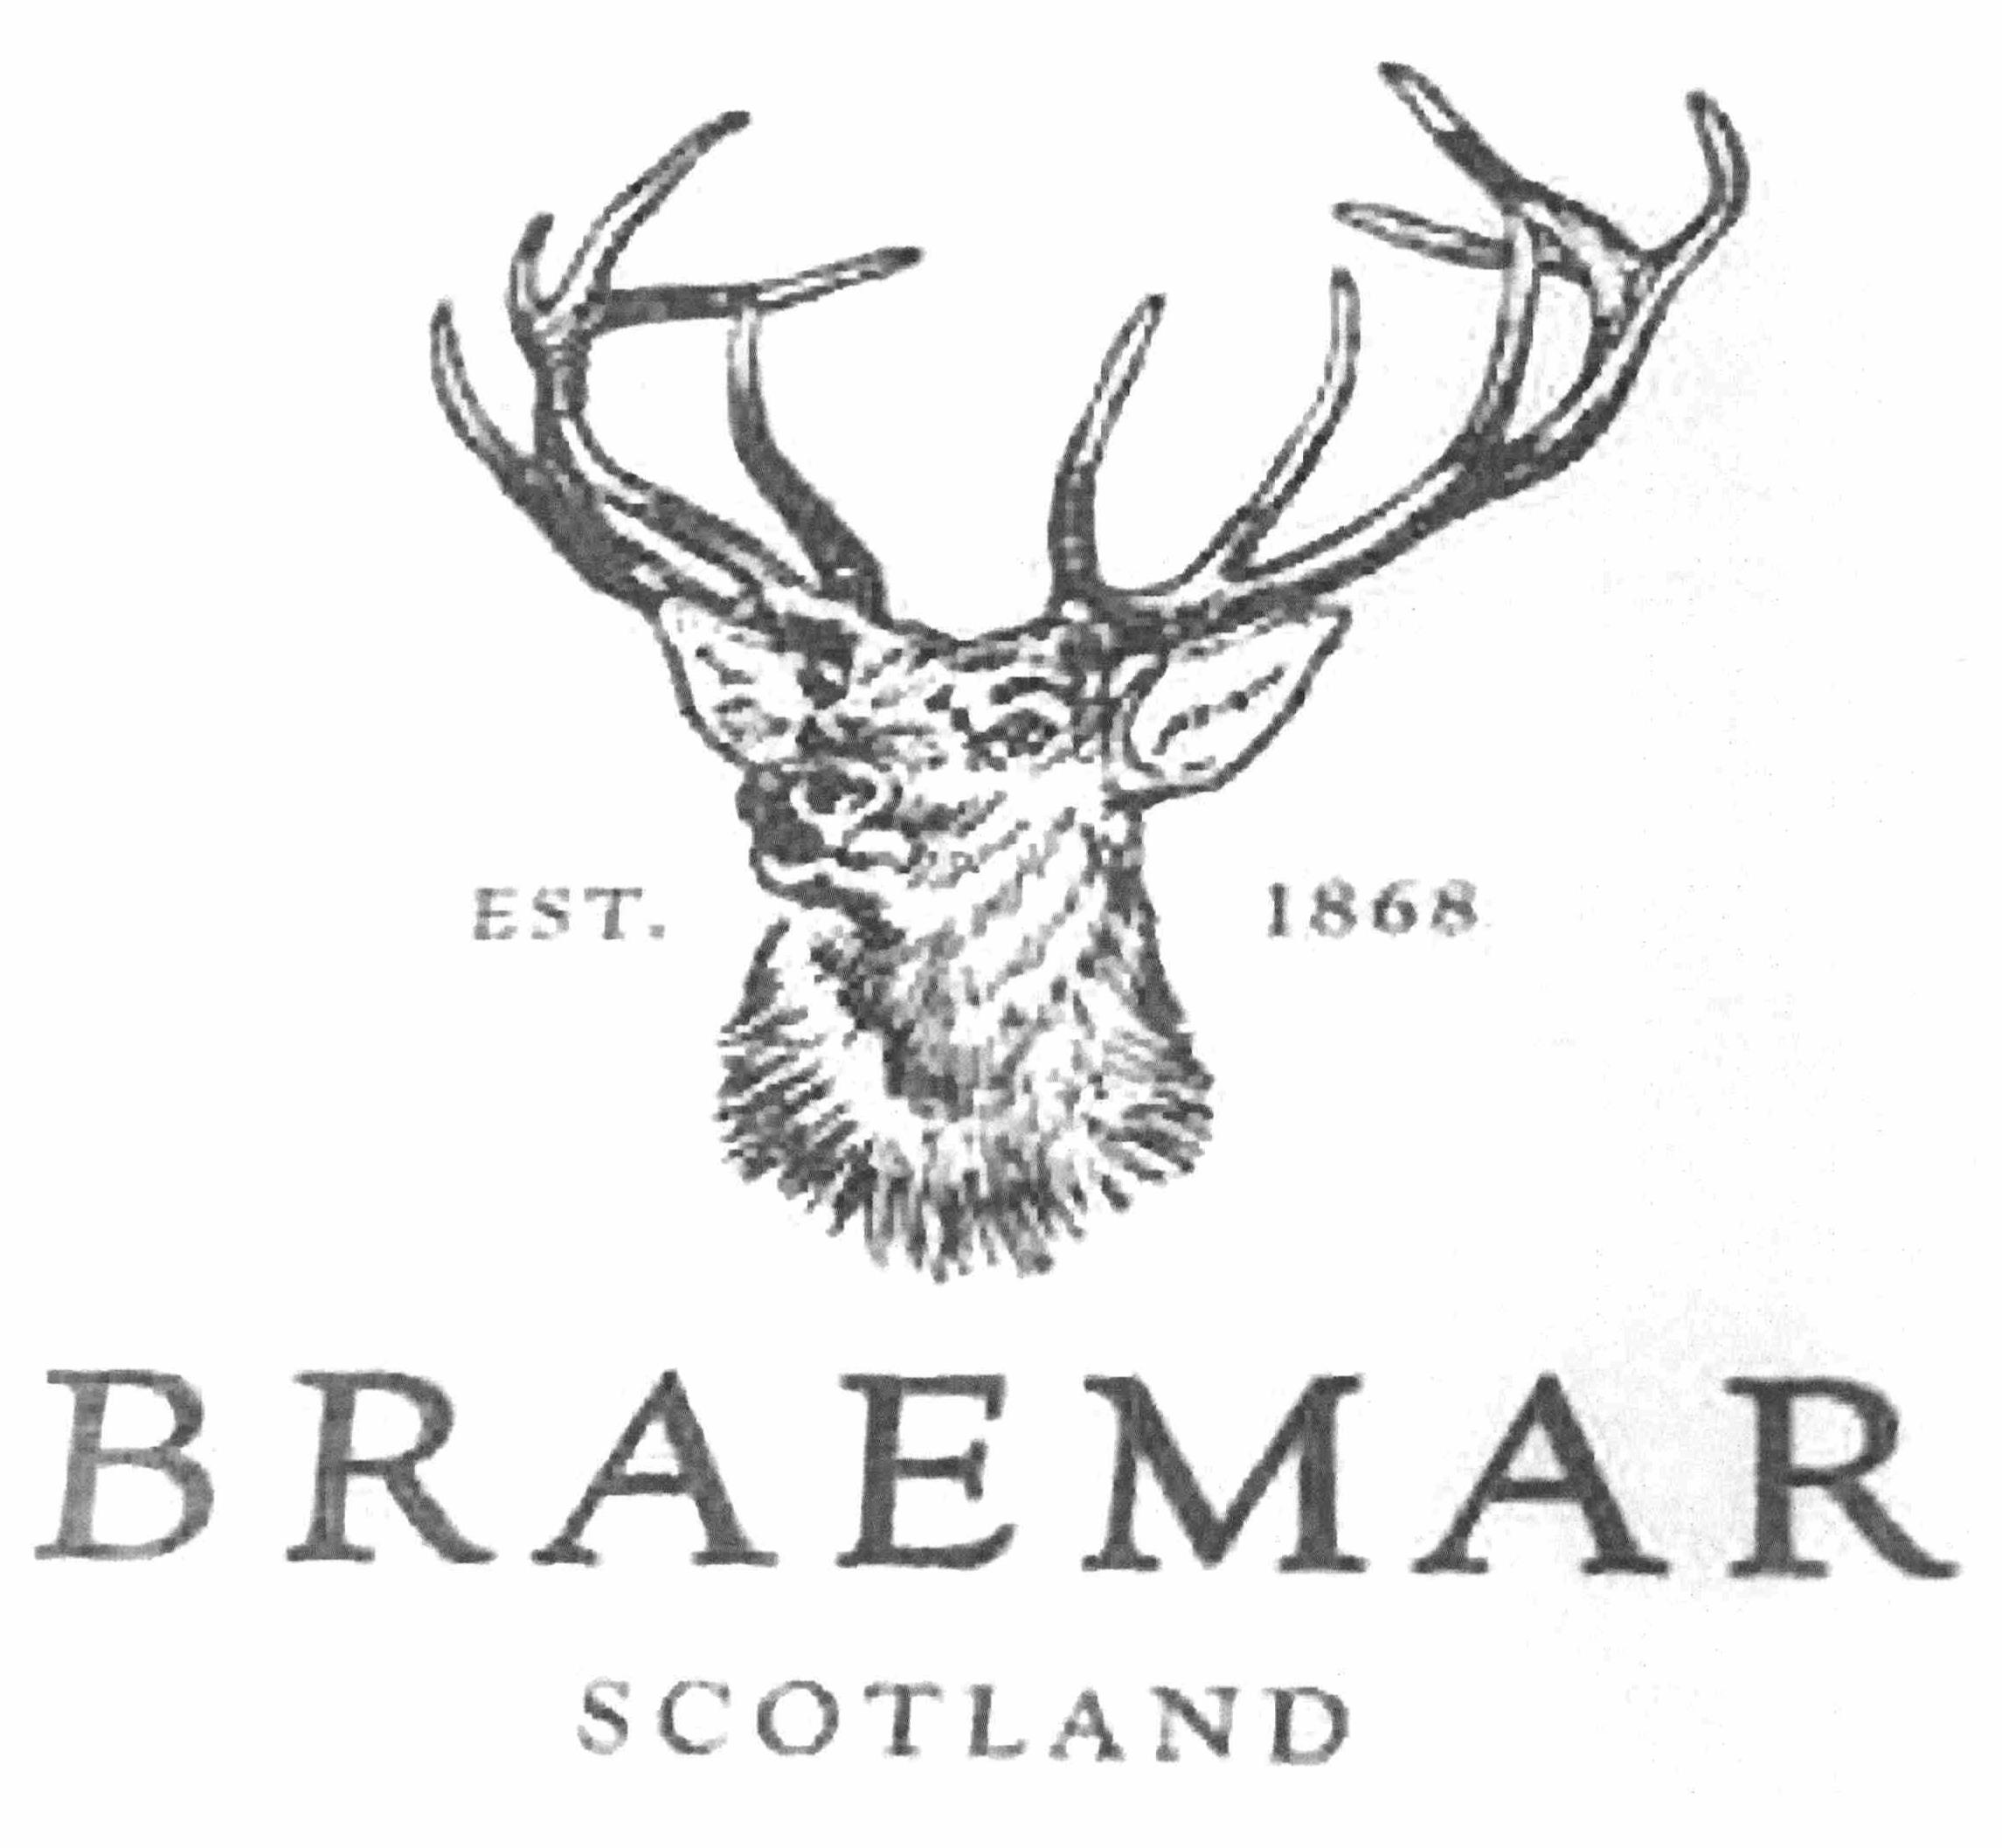  BRAEMAR SCOTLAND EST. 1868